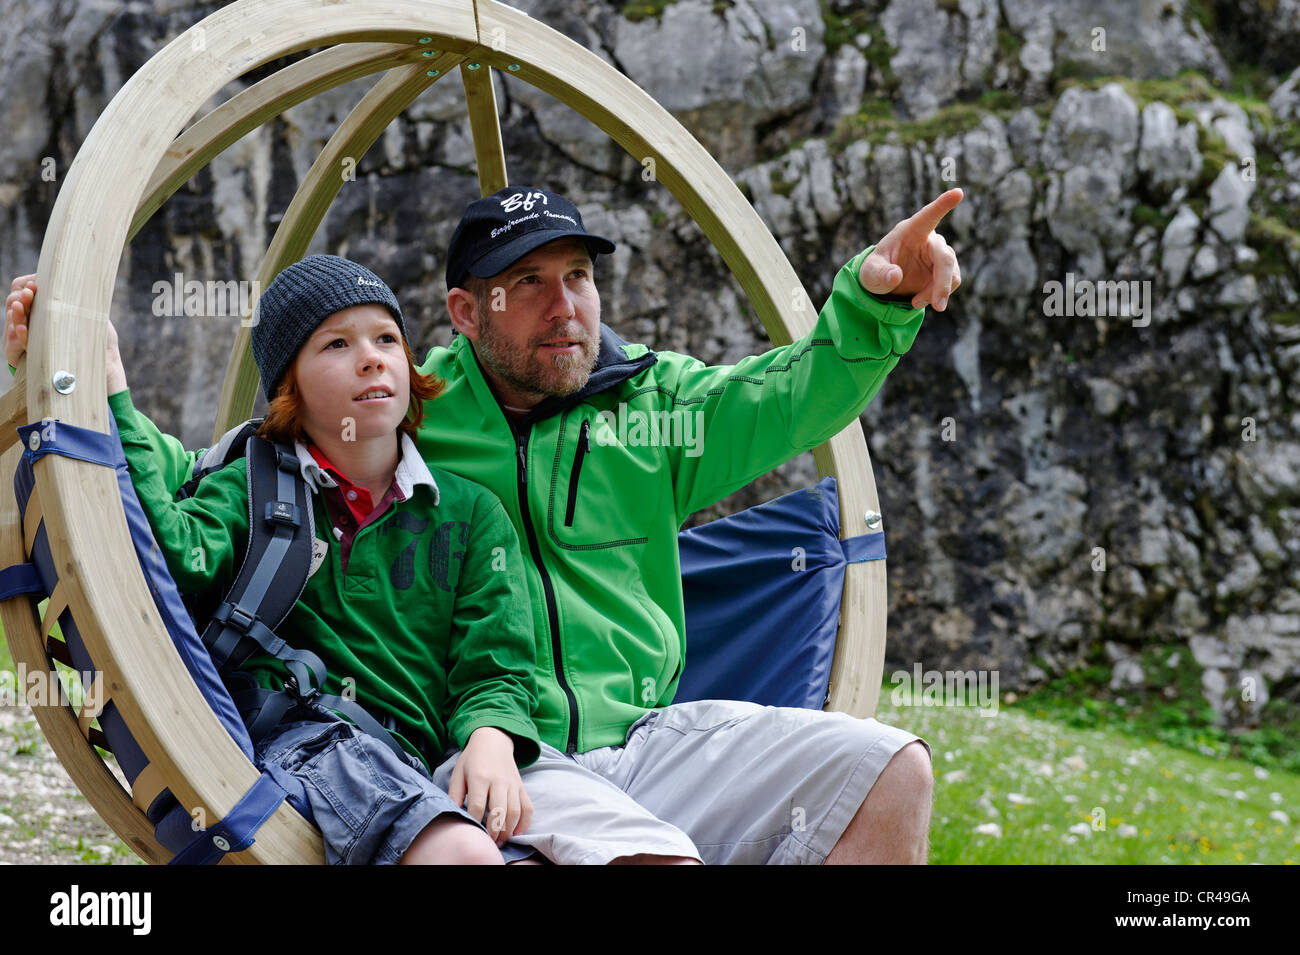 El padre y el hijo en la cumbre, Gipfel-Erlebnisweg aventura Trail a Alpspitzbahn, Garmisch-Partenkirchen, rango de Wetterstein Foto de stock